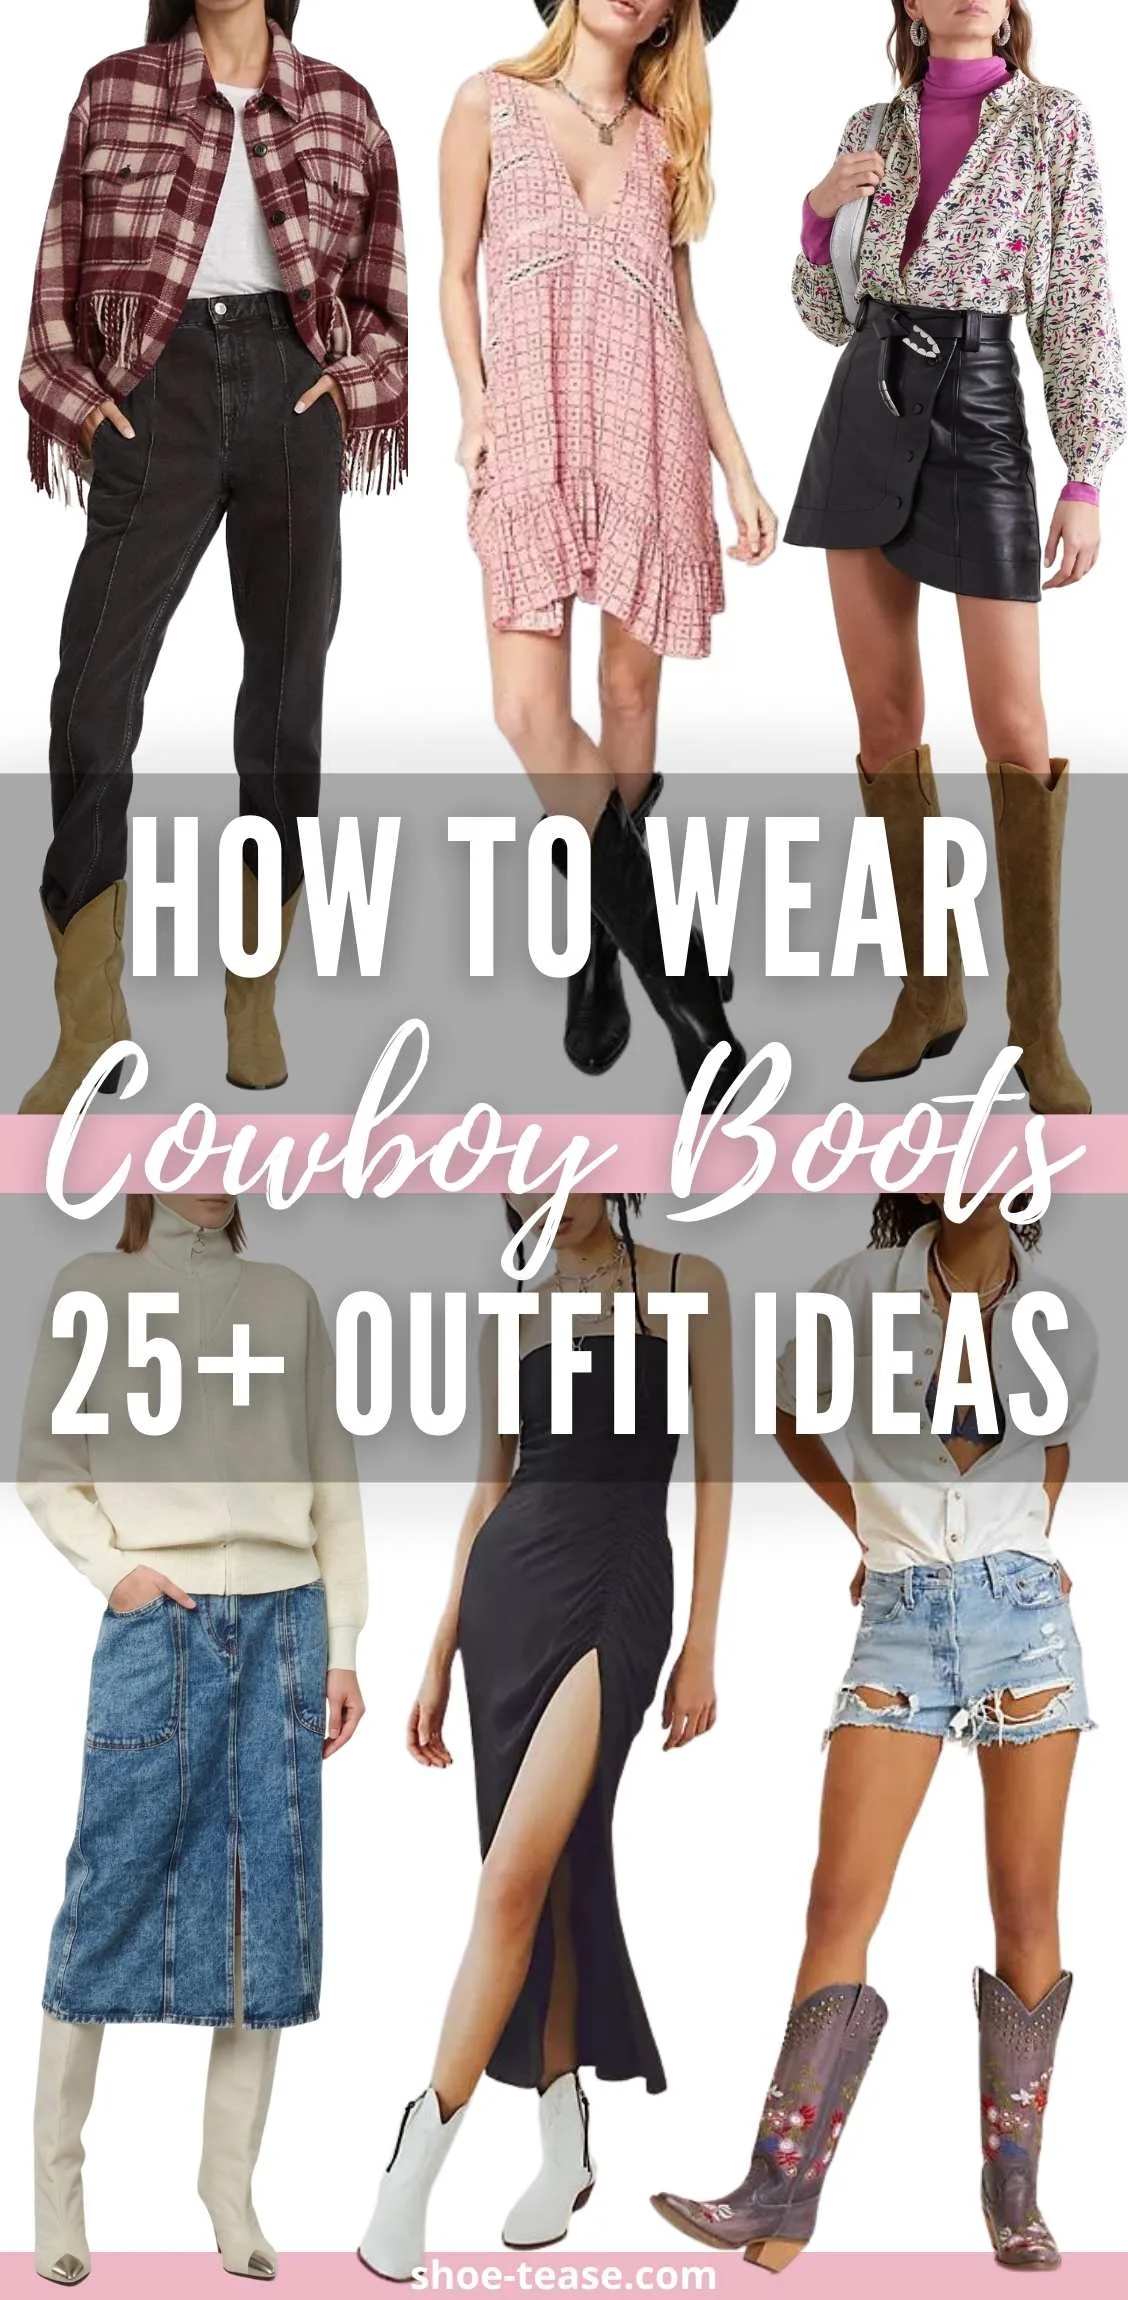 7 Best Ways to Wear Cowboy Boots – Beardbrand